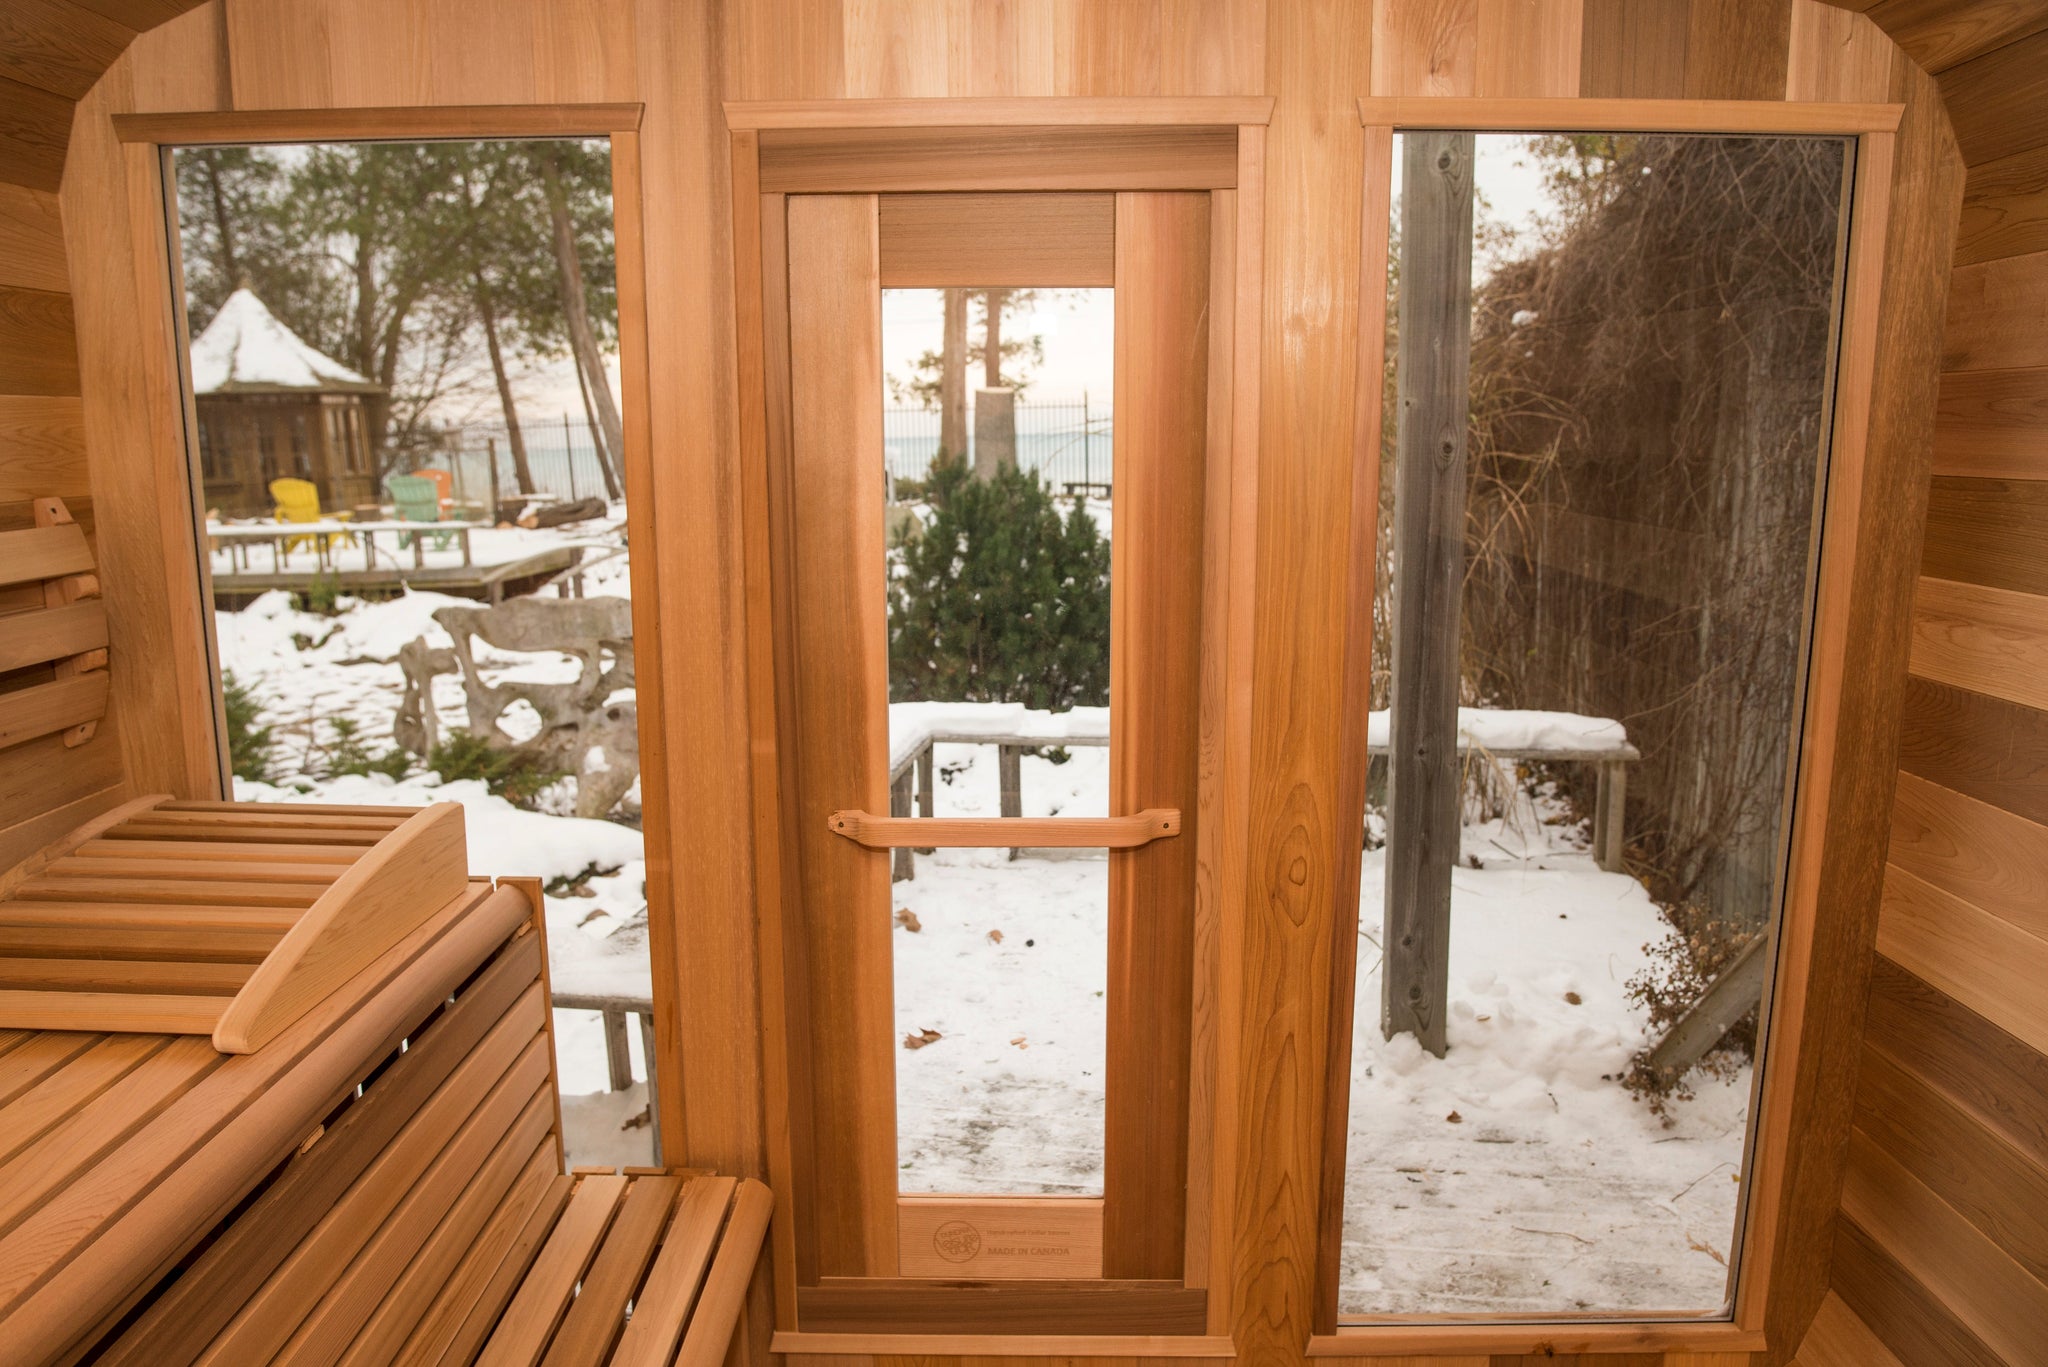 Luna 8'x10' Sauna with 2' Porch, Premium Cedar Wood, and Deluxe Heater System